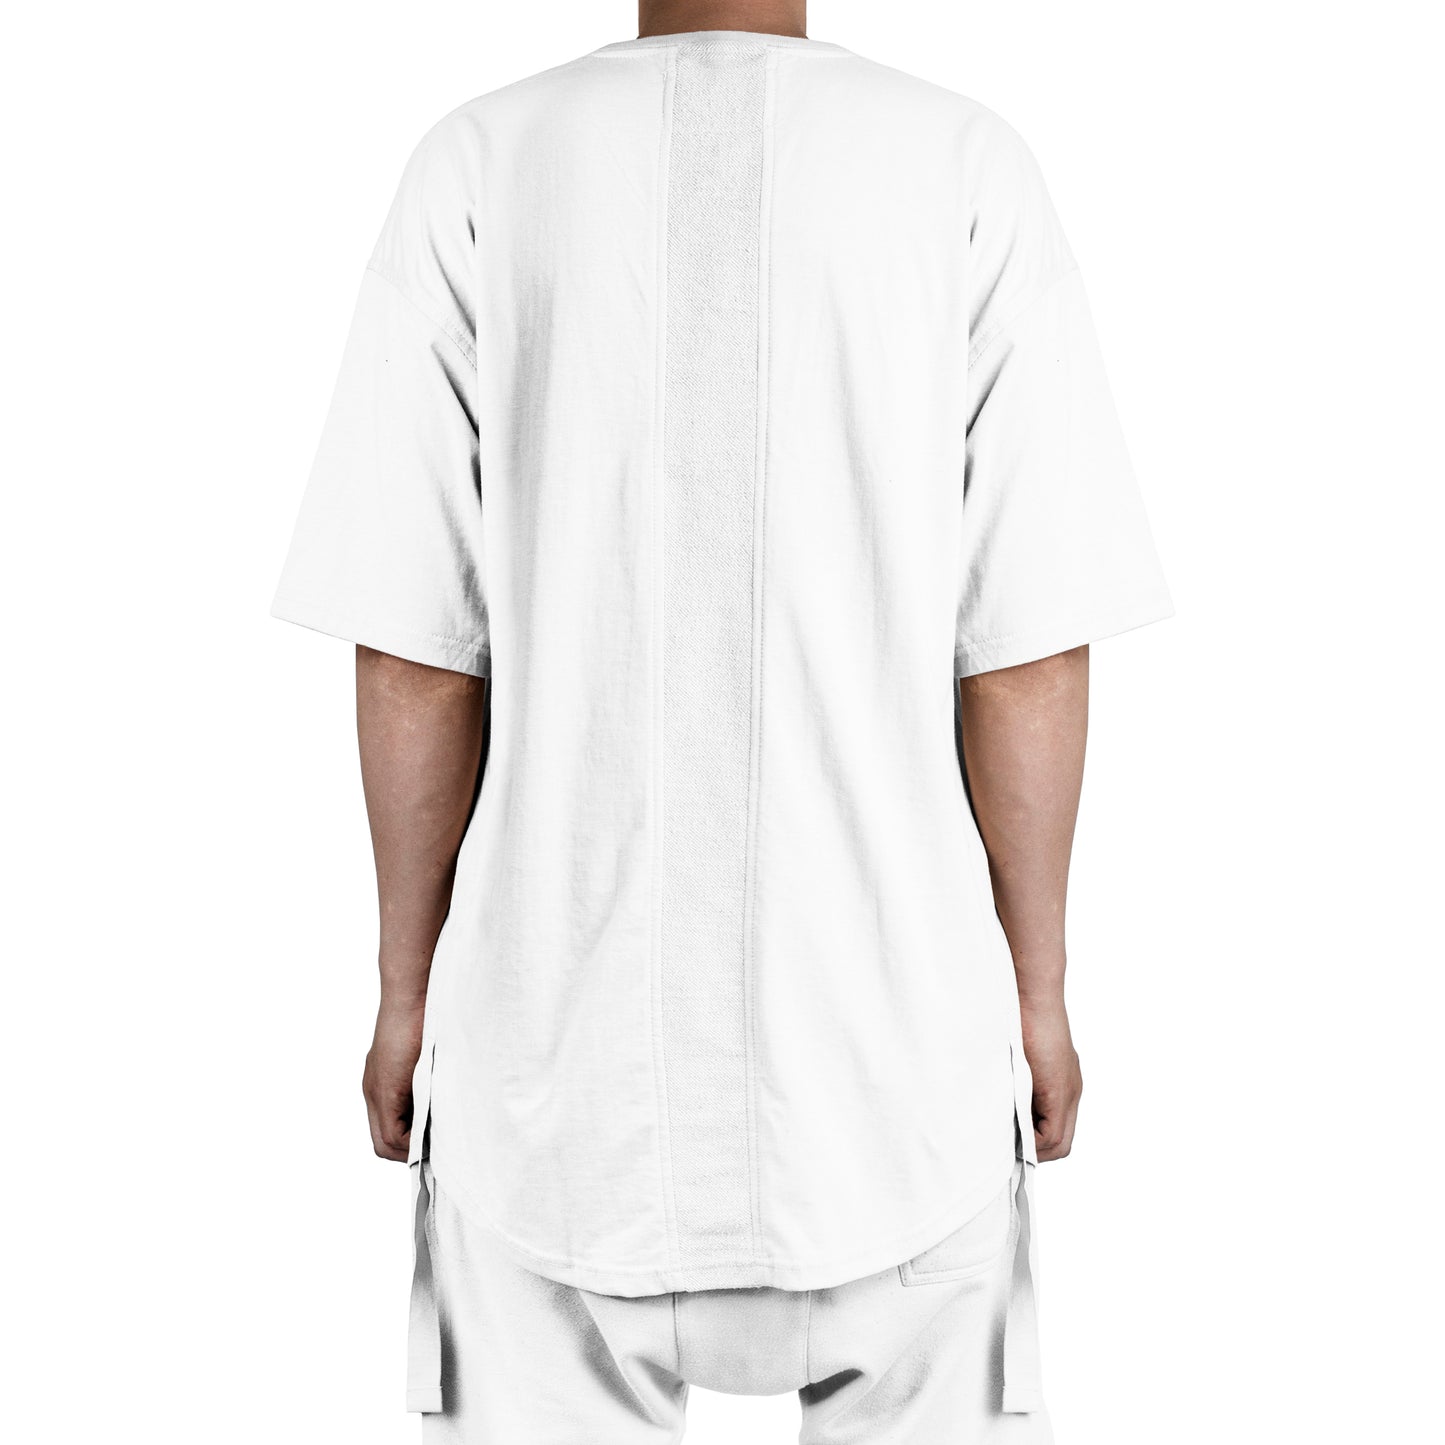 Camiseta SSS: Blanca